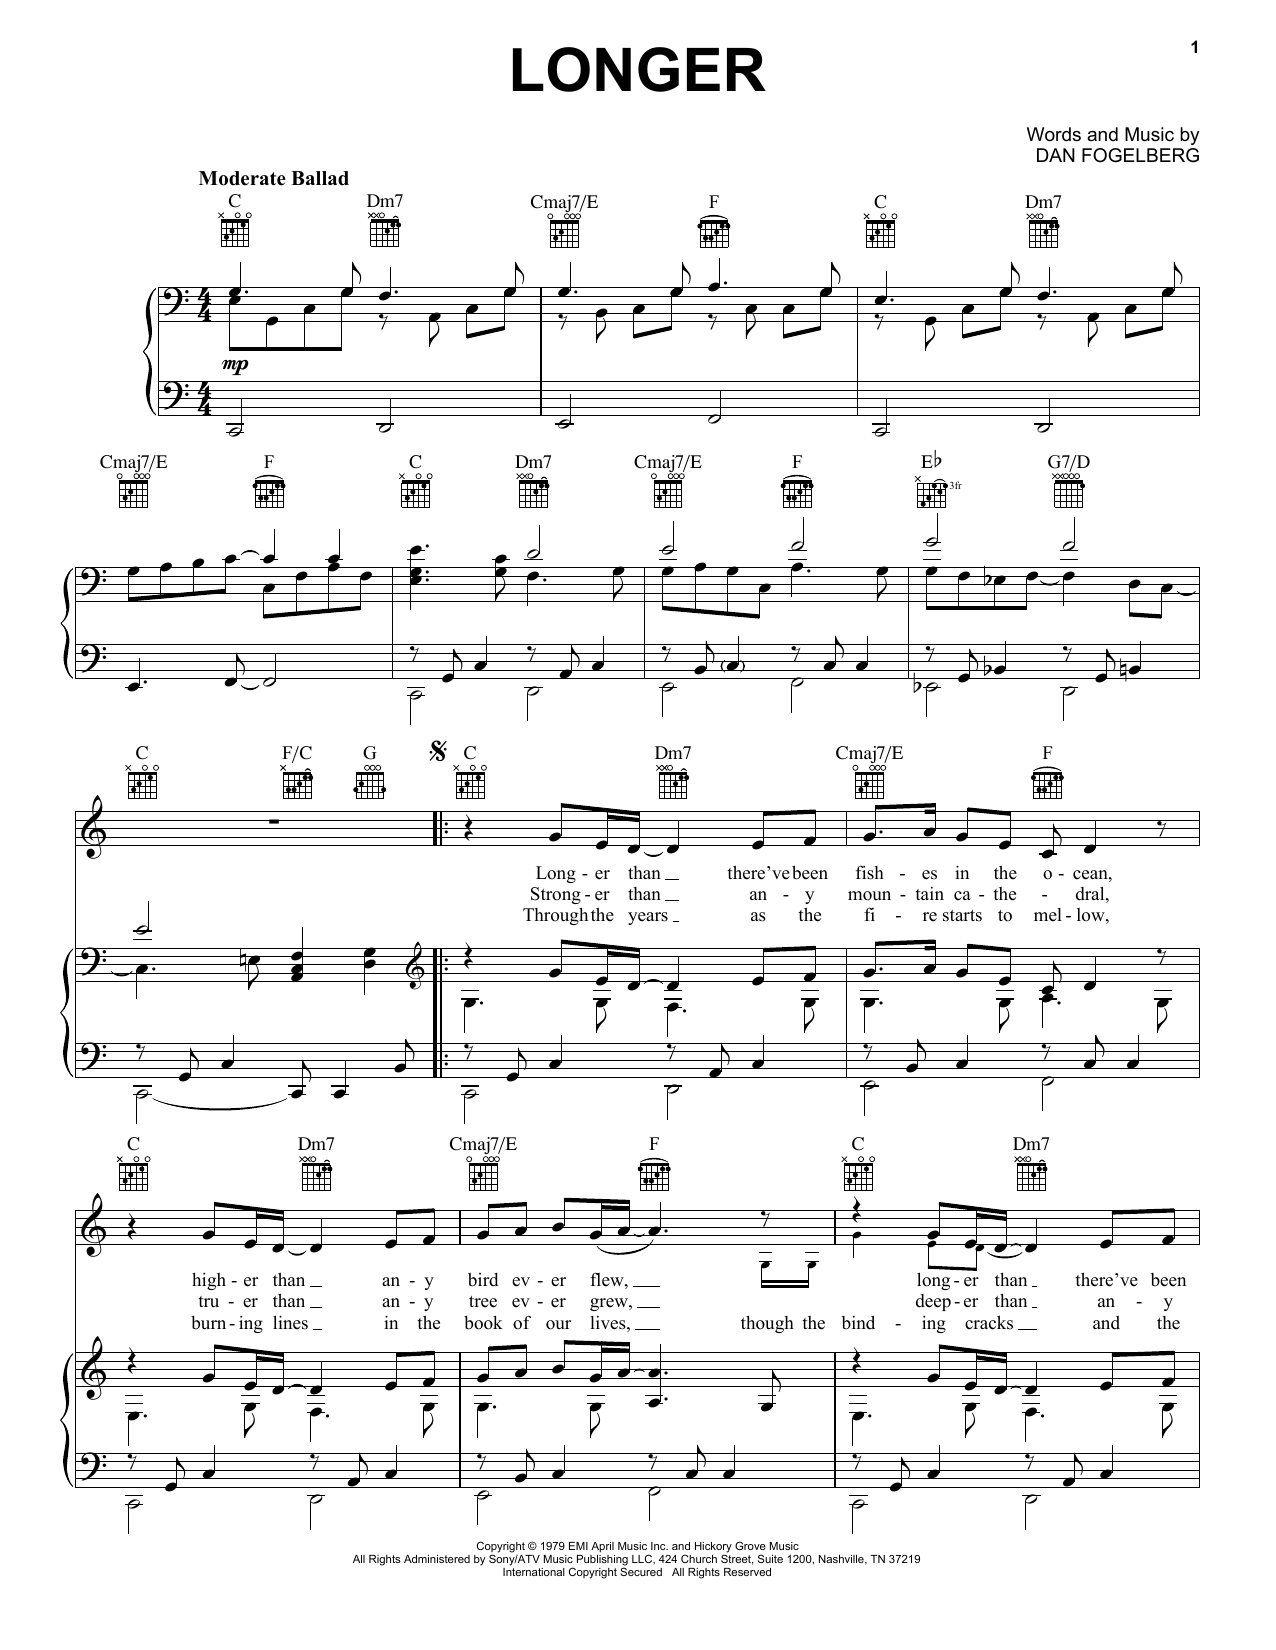 Download Dan Fogelberg Longer Sheet Music and learn how to play Lyrics & Chords PDF digital score in minutes